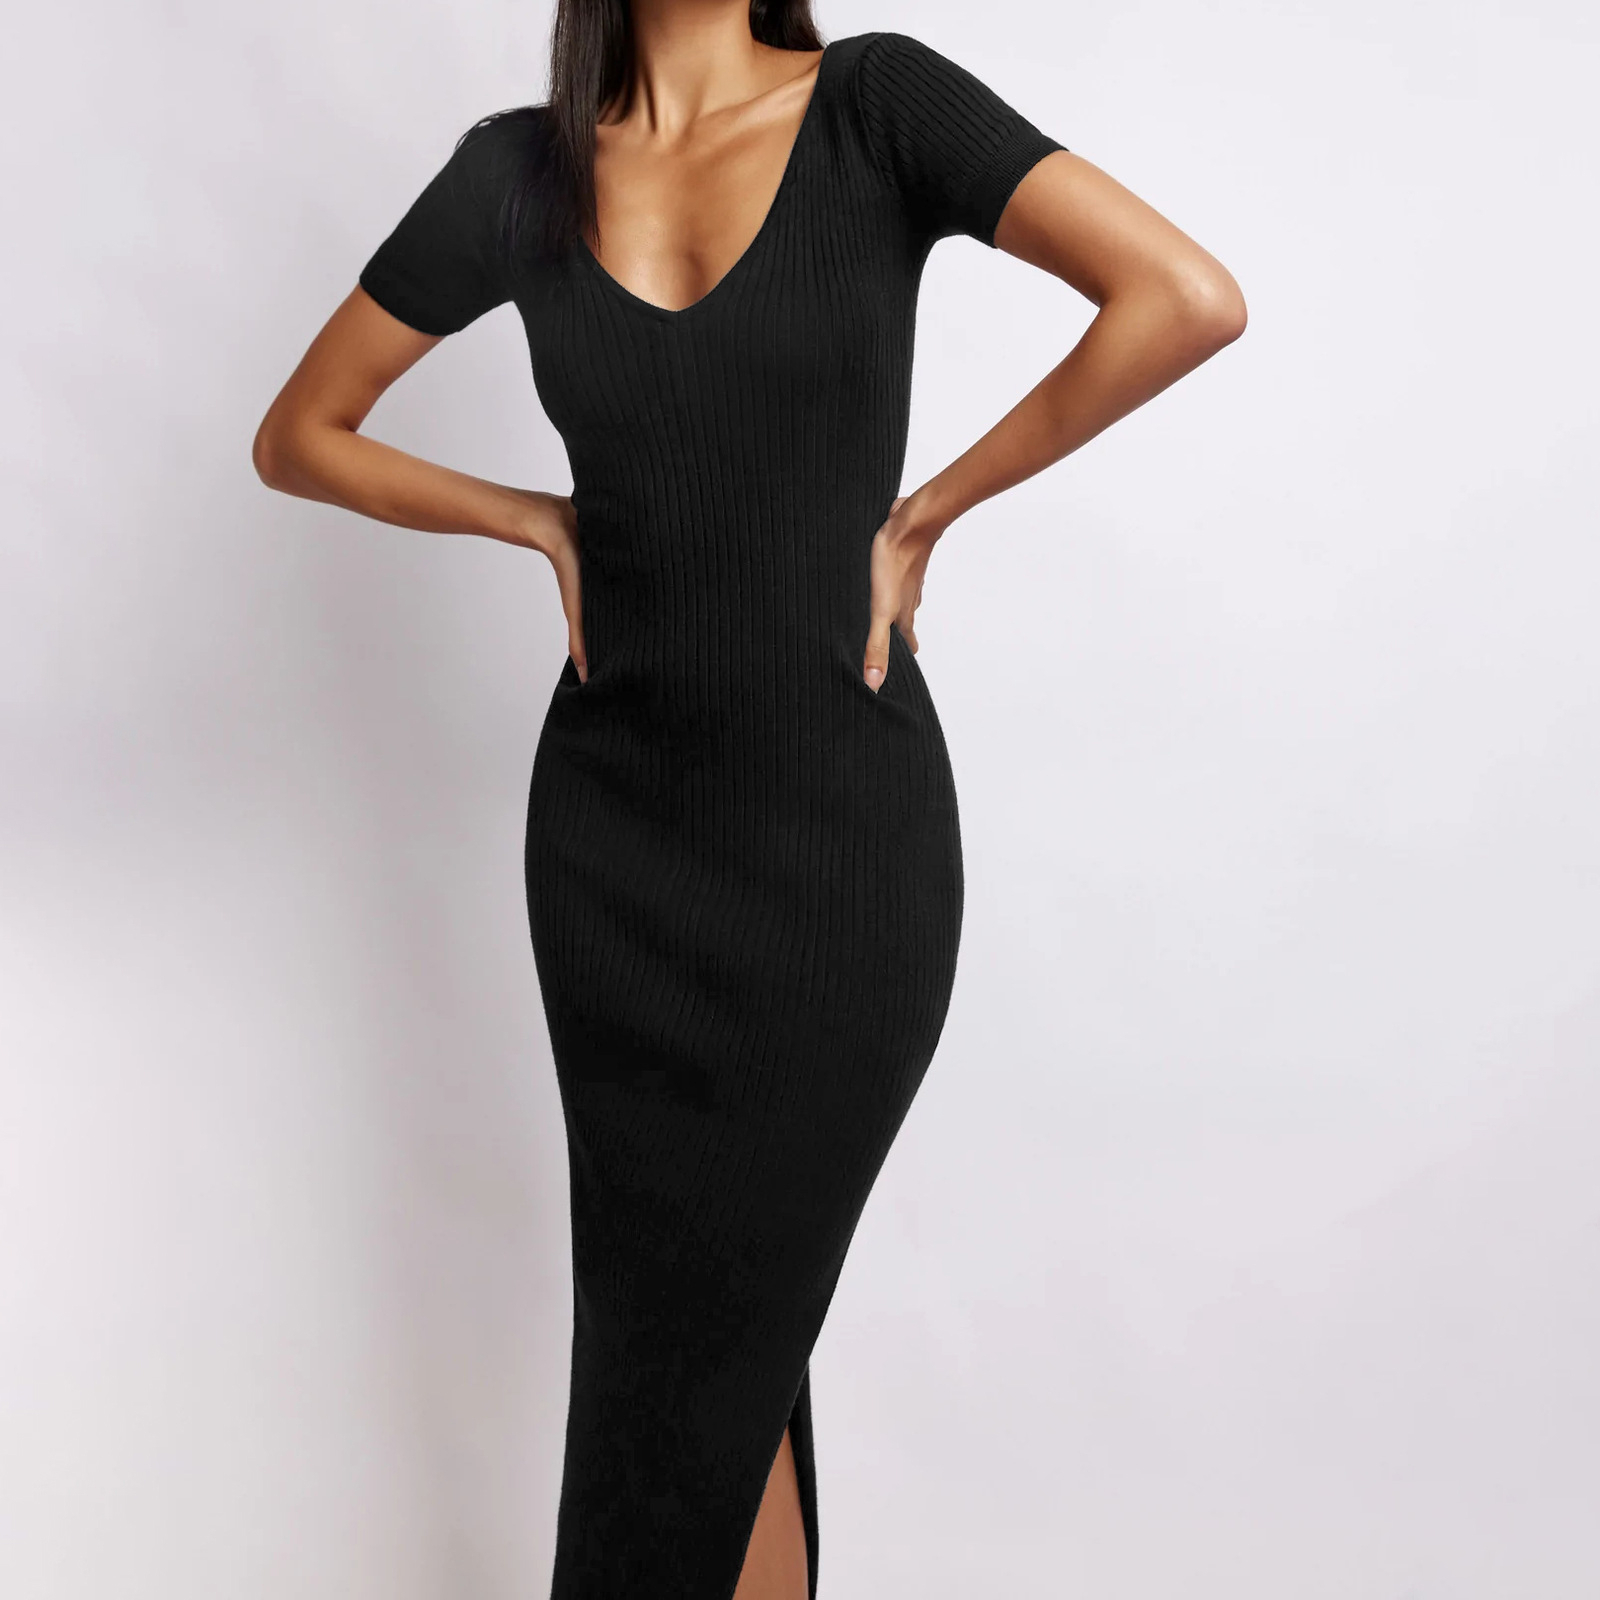 Sexy Women's V-neck Tight-fitting Split Skirt - Black, X-Large